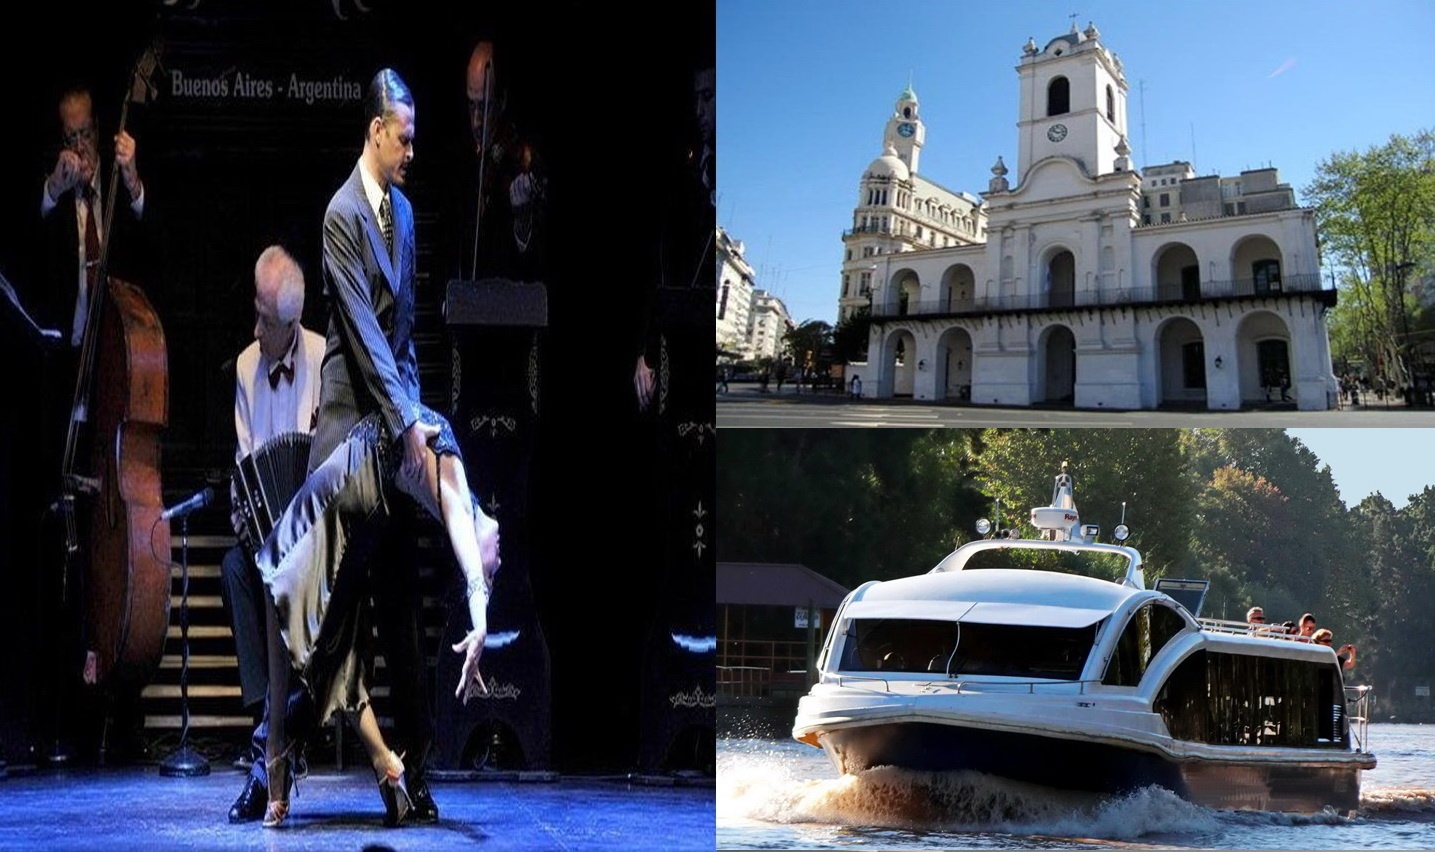 tourhub | Private Tours | Buenos Aires Super Saver: Small-Group City Tour, Early Tango Show & Tigre Tour 